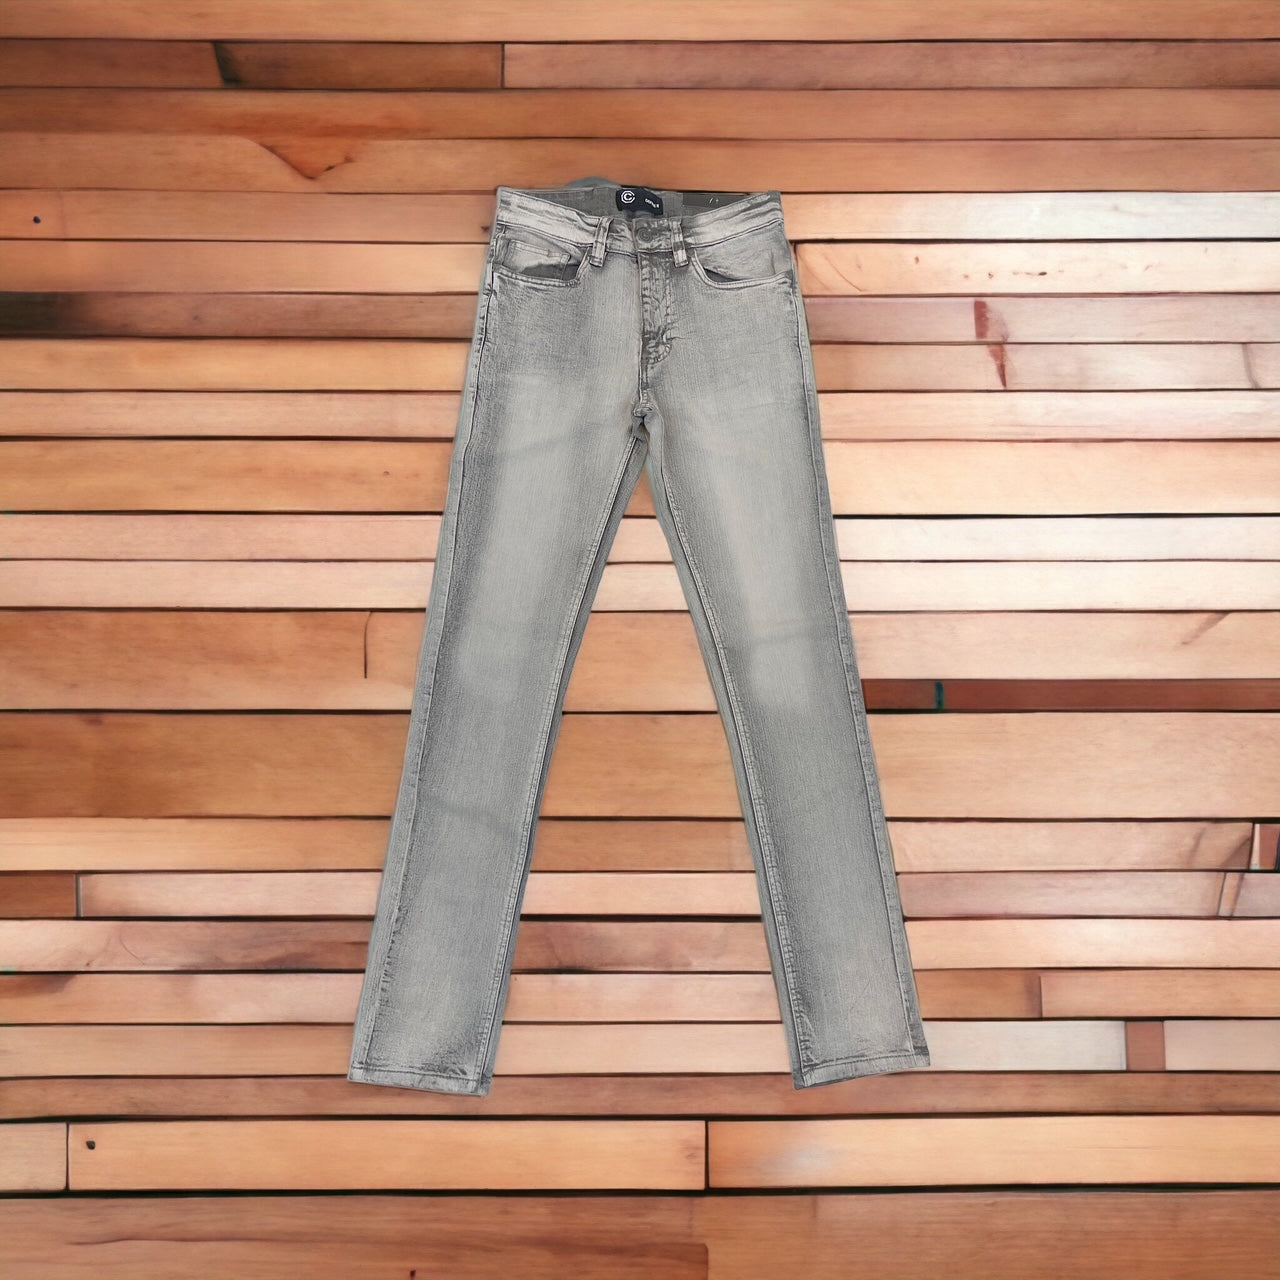 Super Skinny High Ankle Jeans - Light grey denim - Ladies | H&M IN